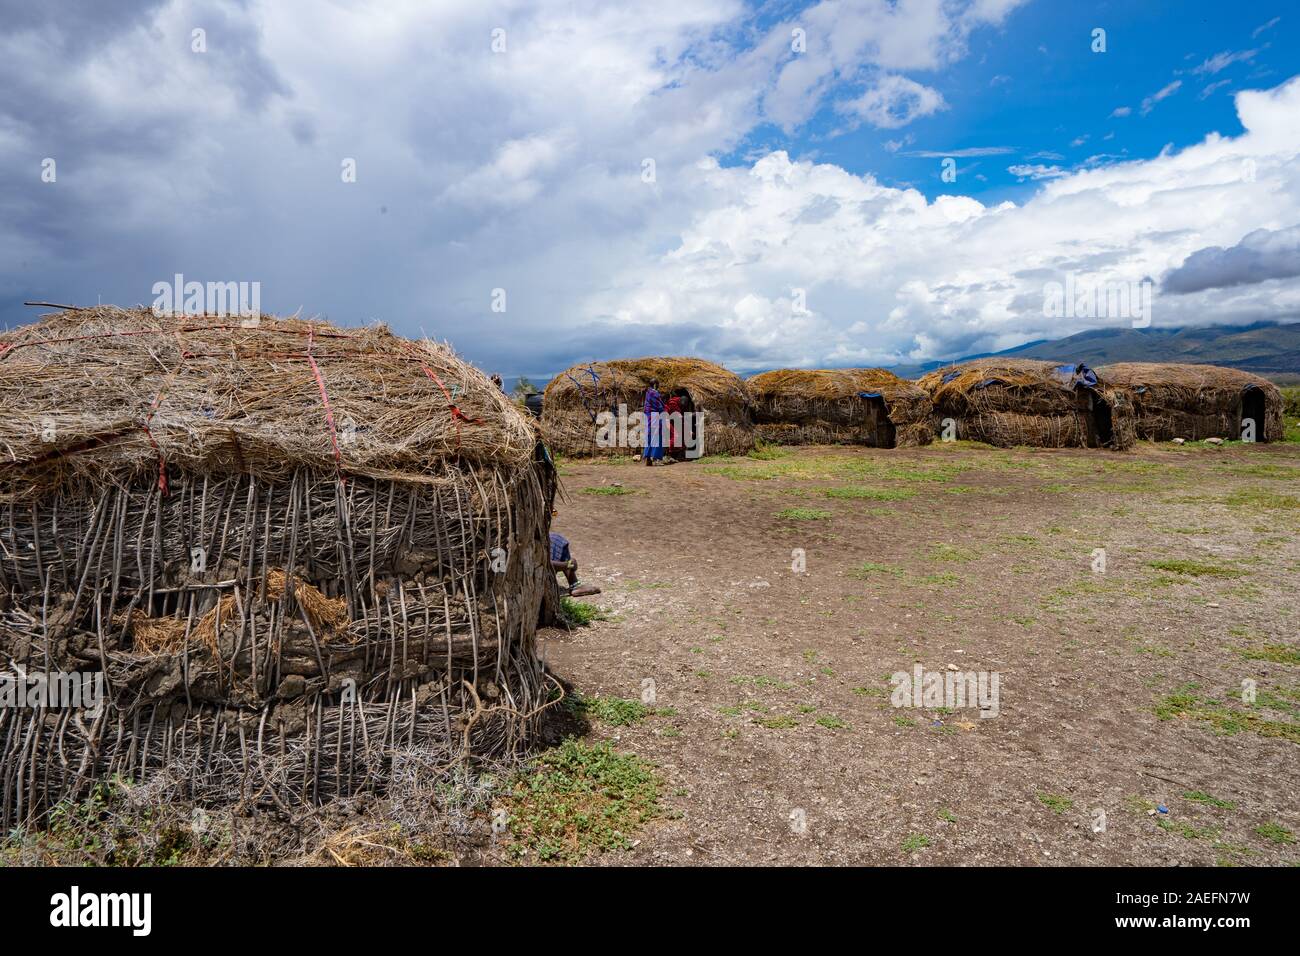 Village of the Masai tribe Stock Photo